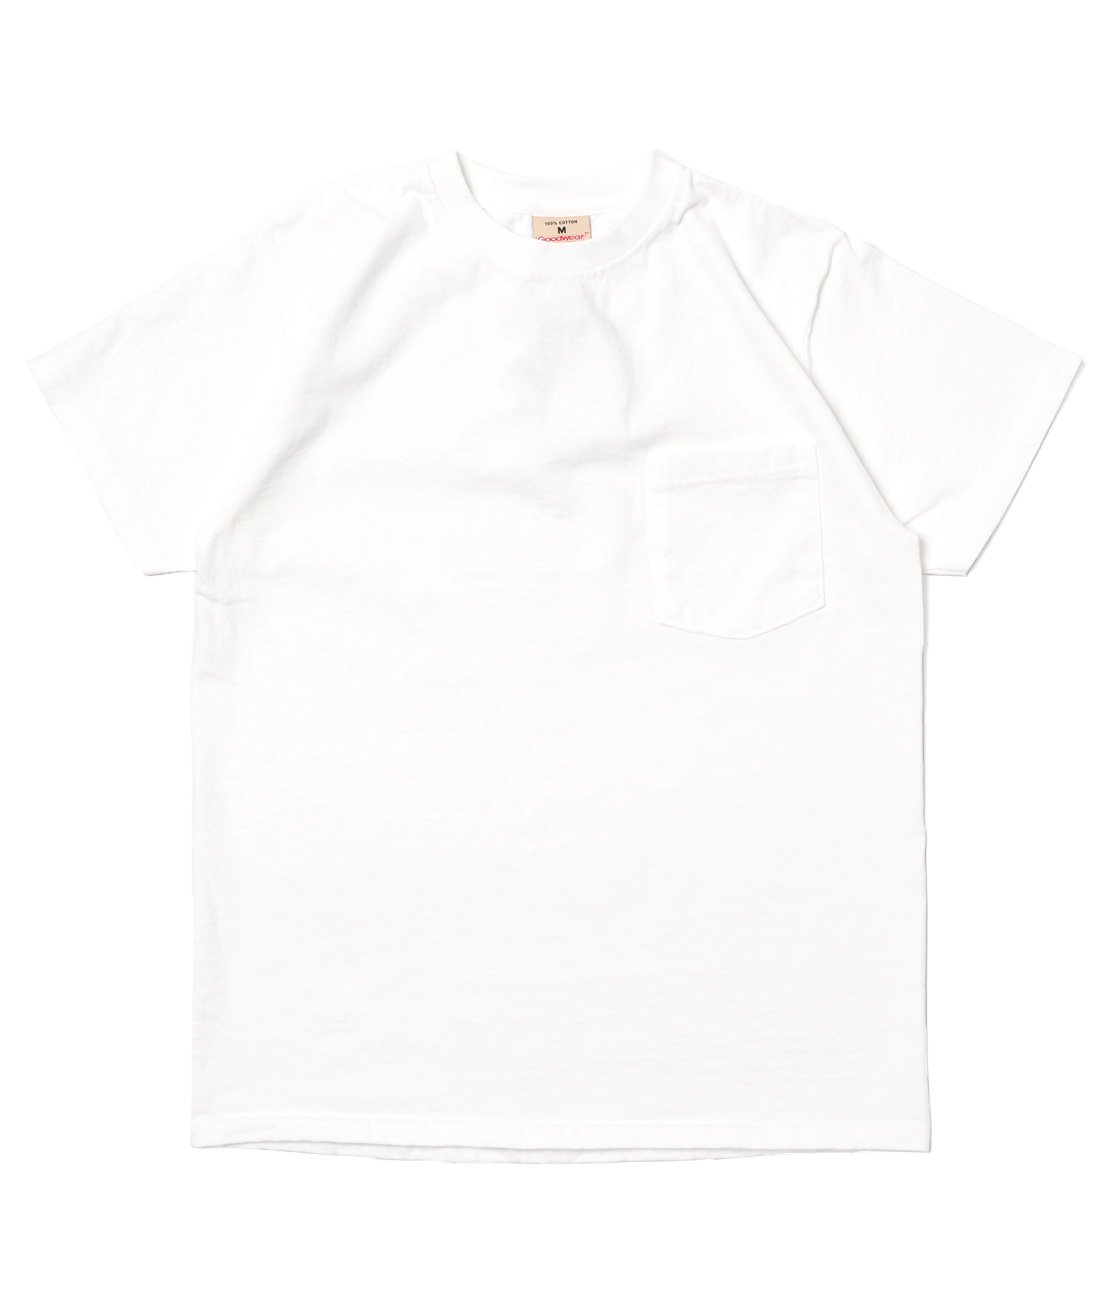 GOODWEAR】CREW NECK POCKET TEE - WHITE 7.2オンス Tシャツ USA製 